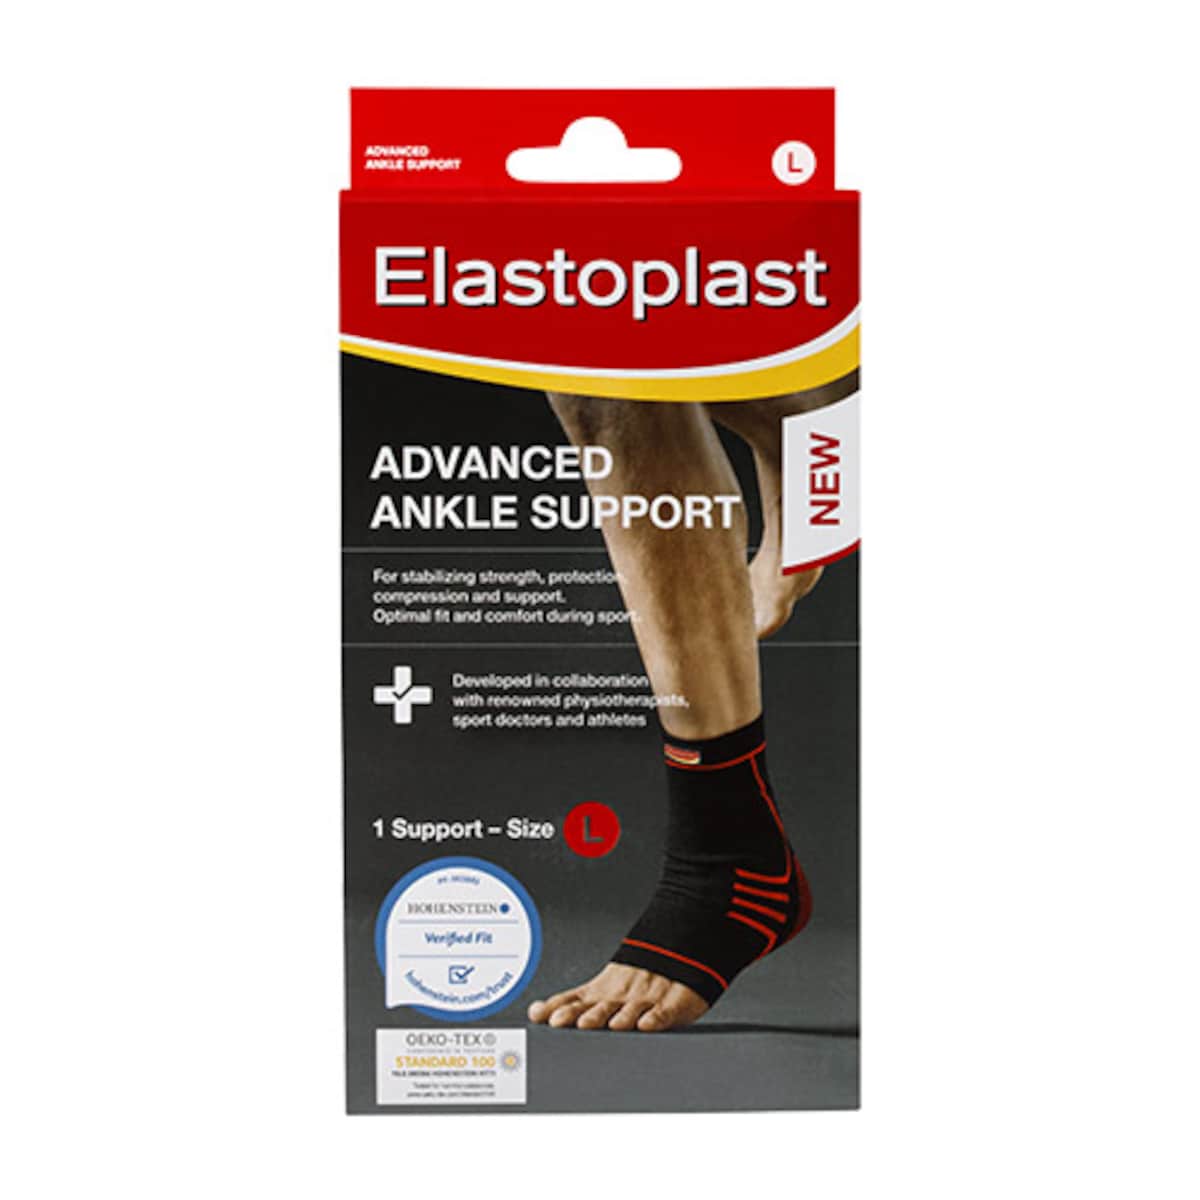 Elastoplast Advanced Ankle Support Large 1 Support